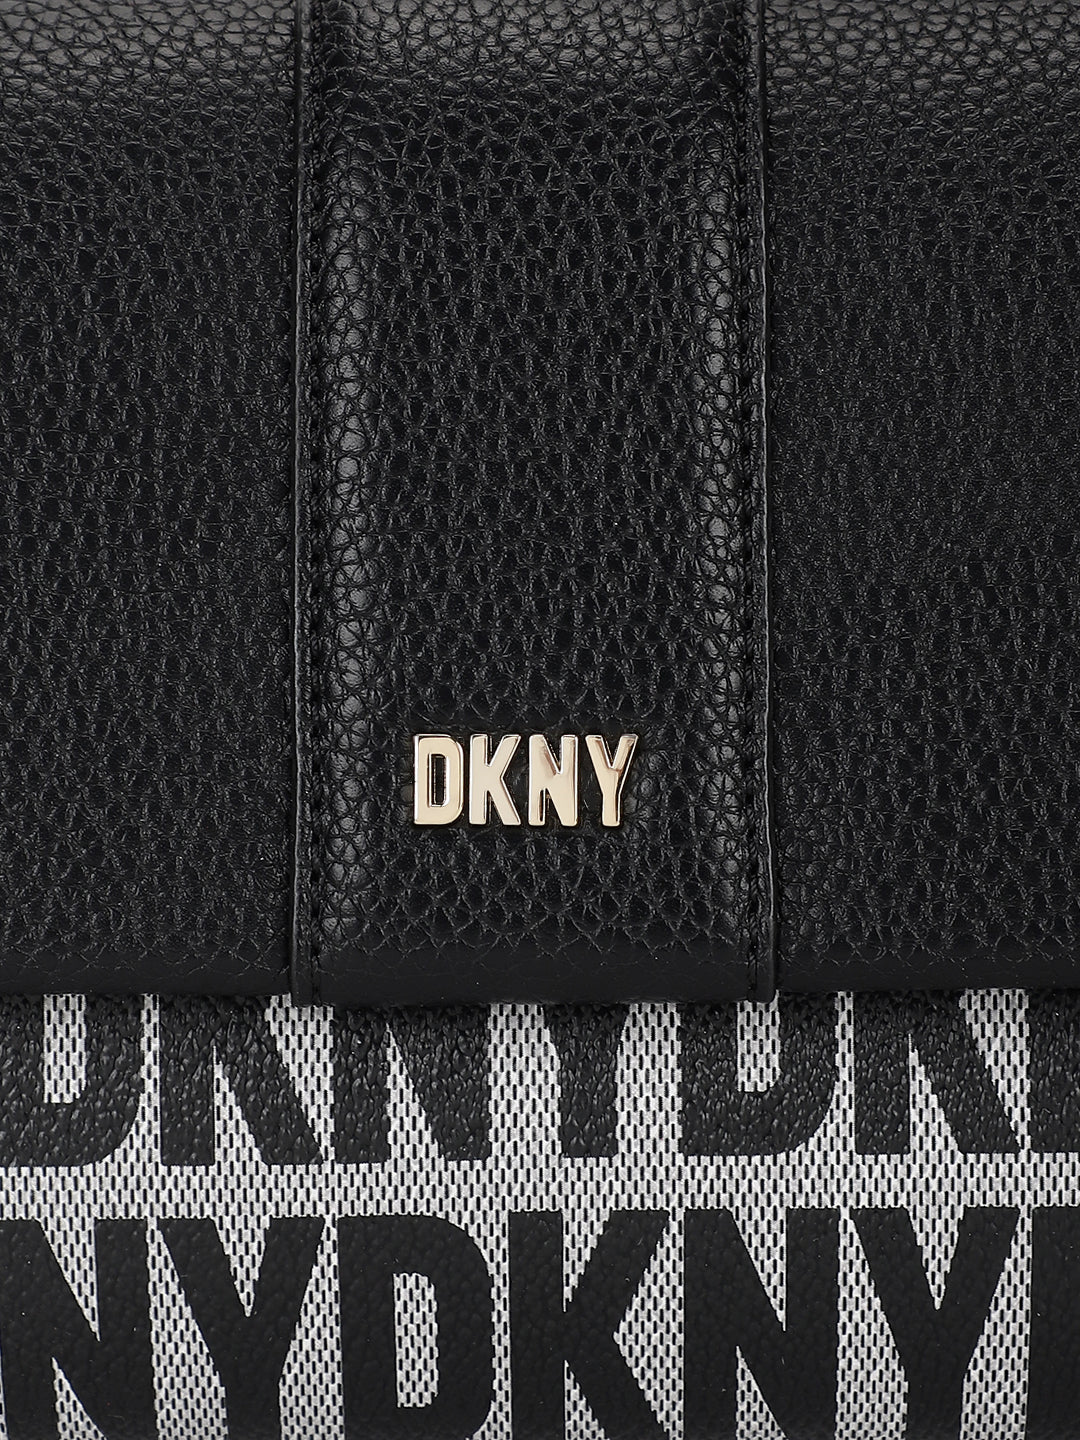 Amazon.com: DKNY INES Tote Bag, Eggshell/CRML : Clothing, Shoes & Jewelry